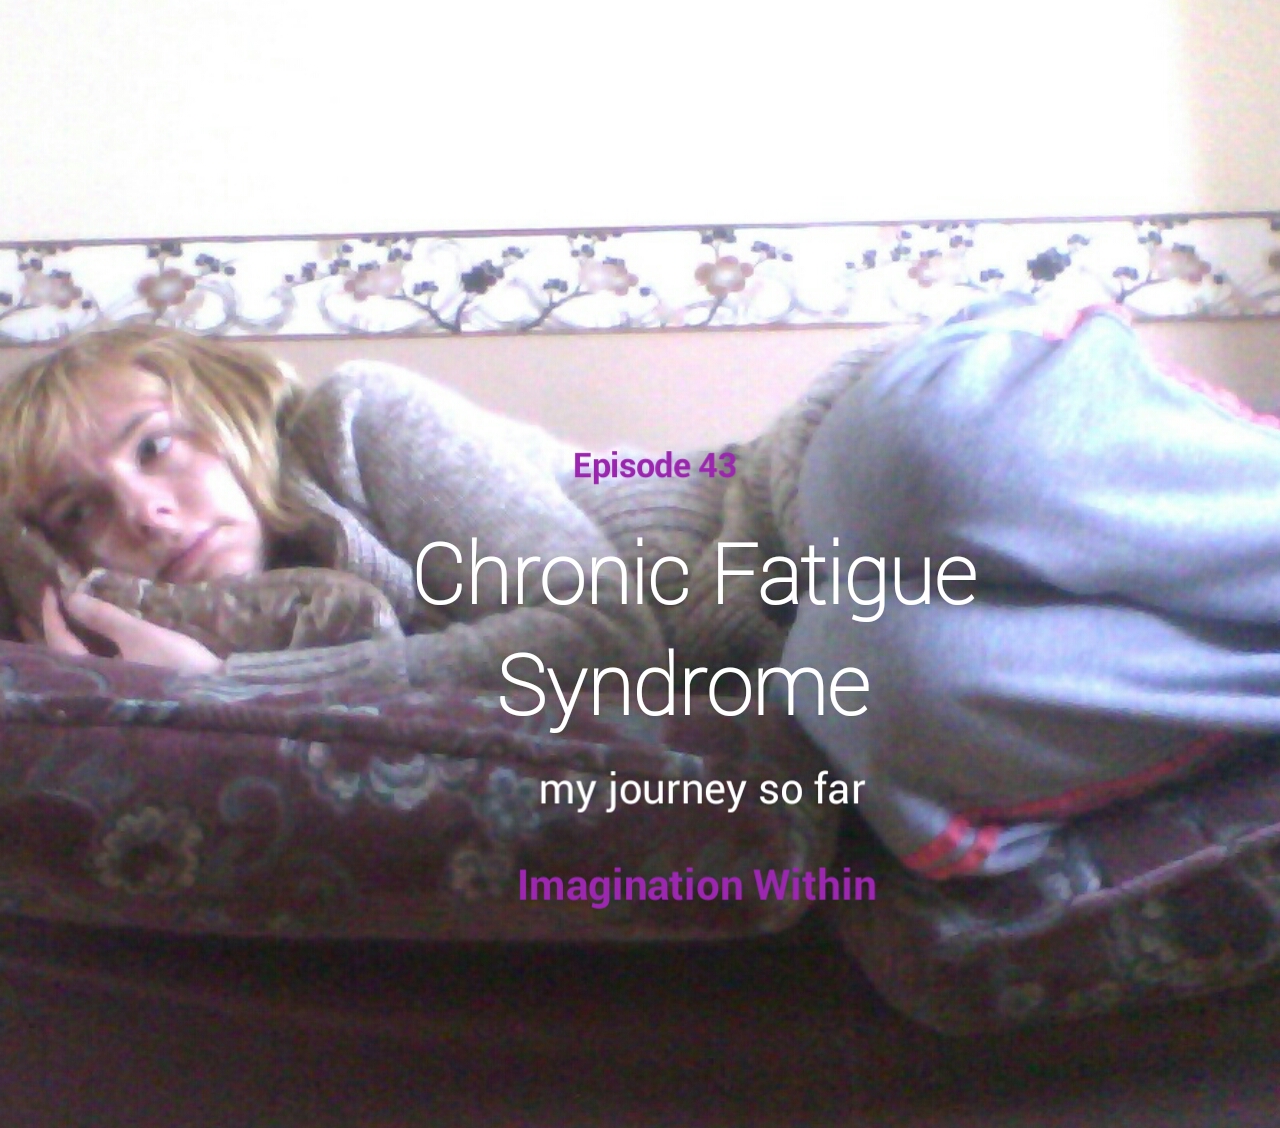 Episode 43 Chronic Fatigue Syndrome - my journey so far.